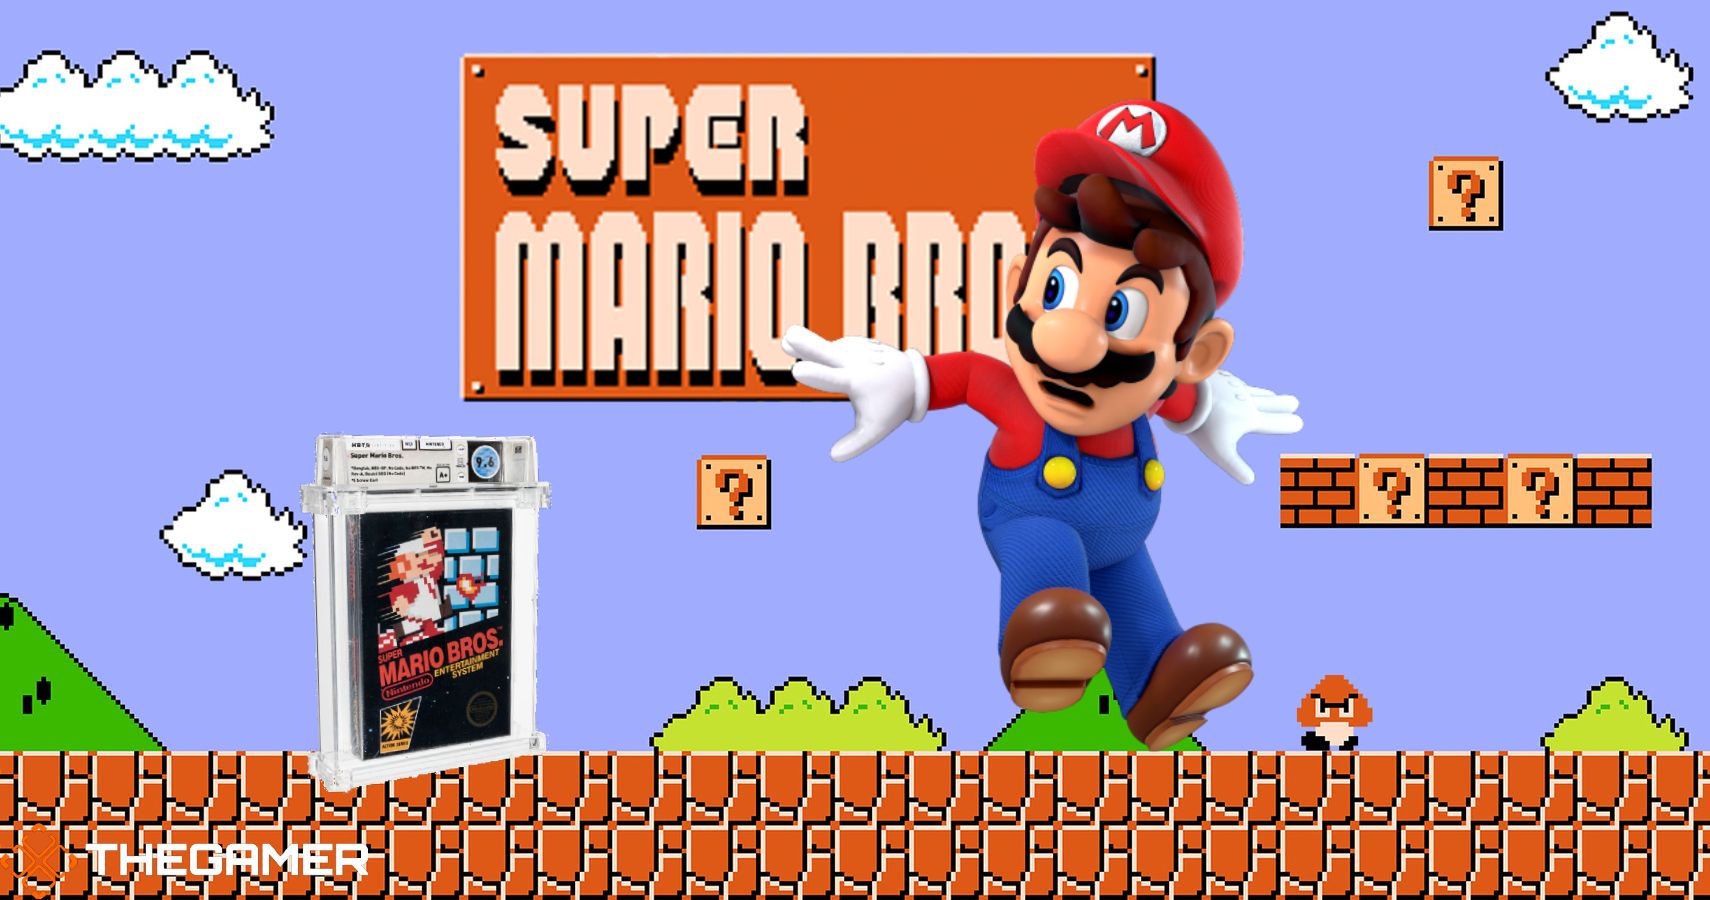 Mamma Mia! Vintage Super Mario Bros. Cartridge Sell For $660,000